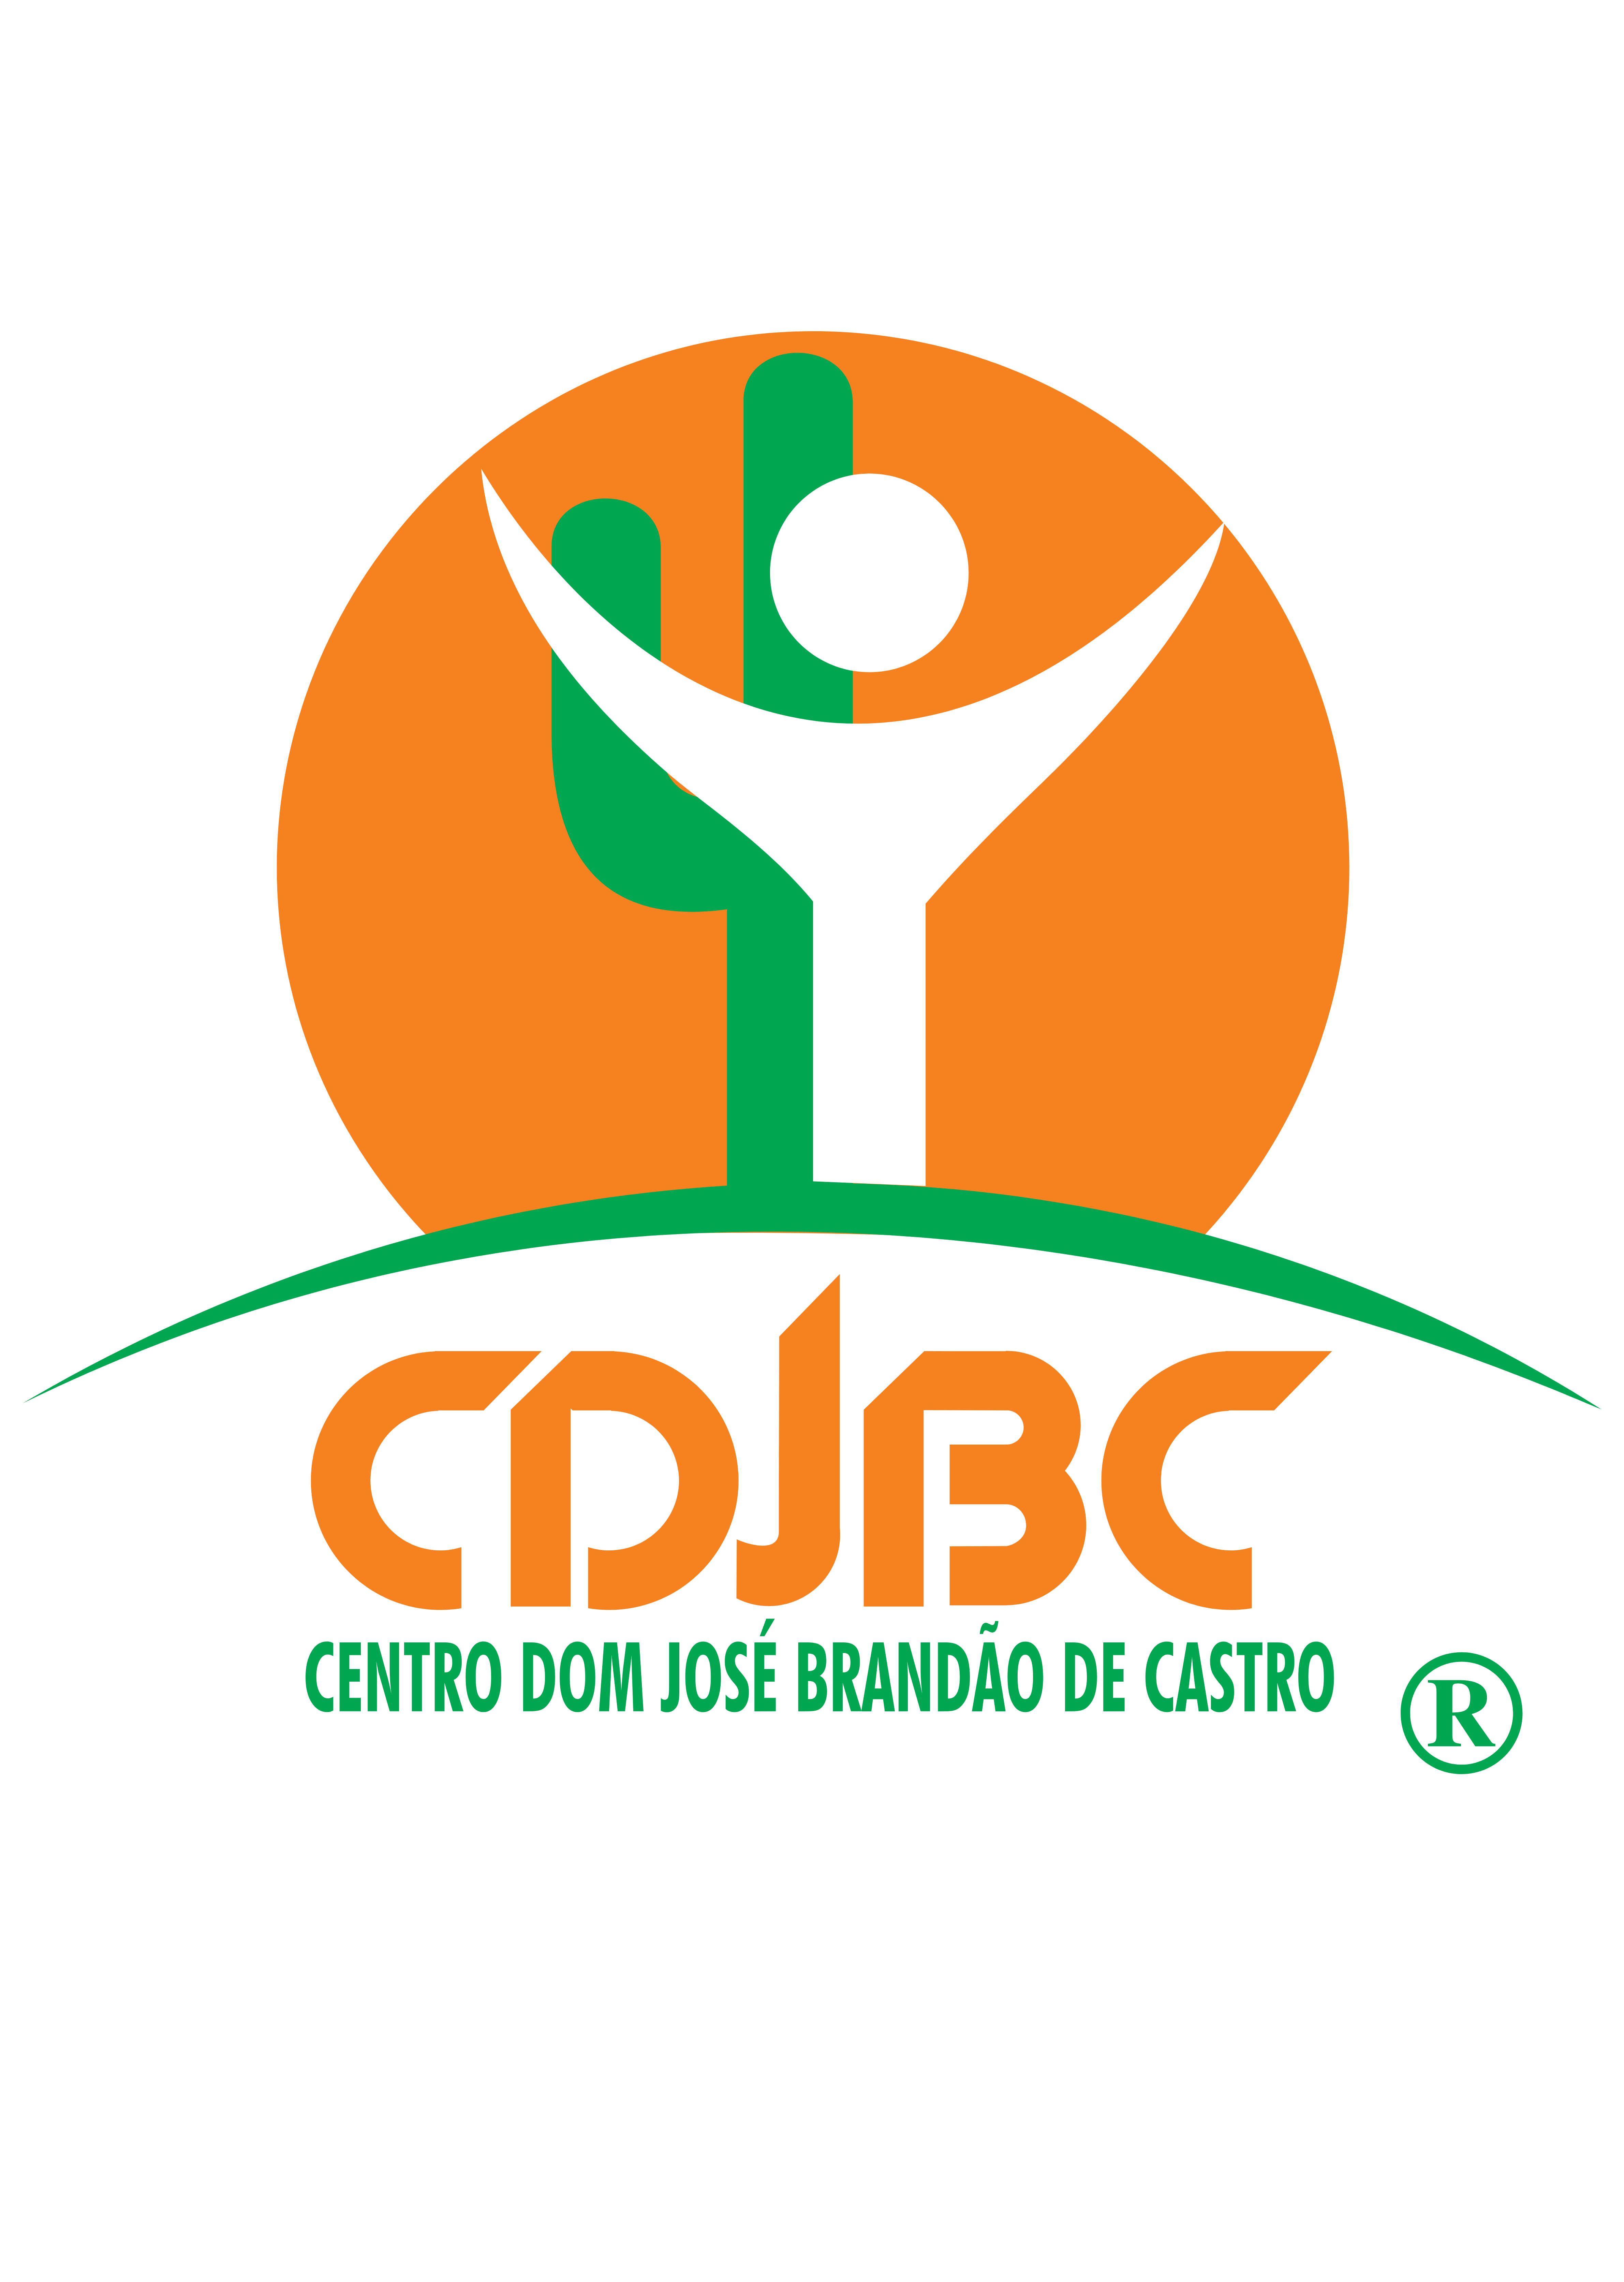 Logo CDJBC